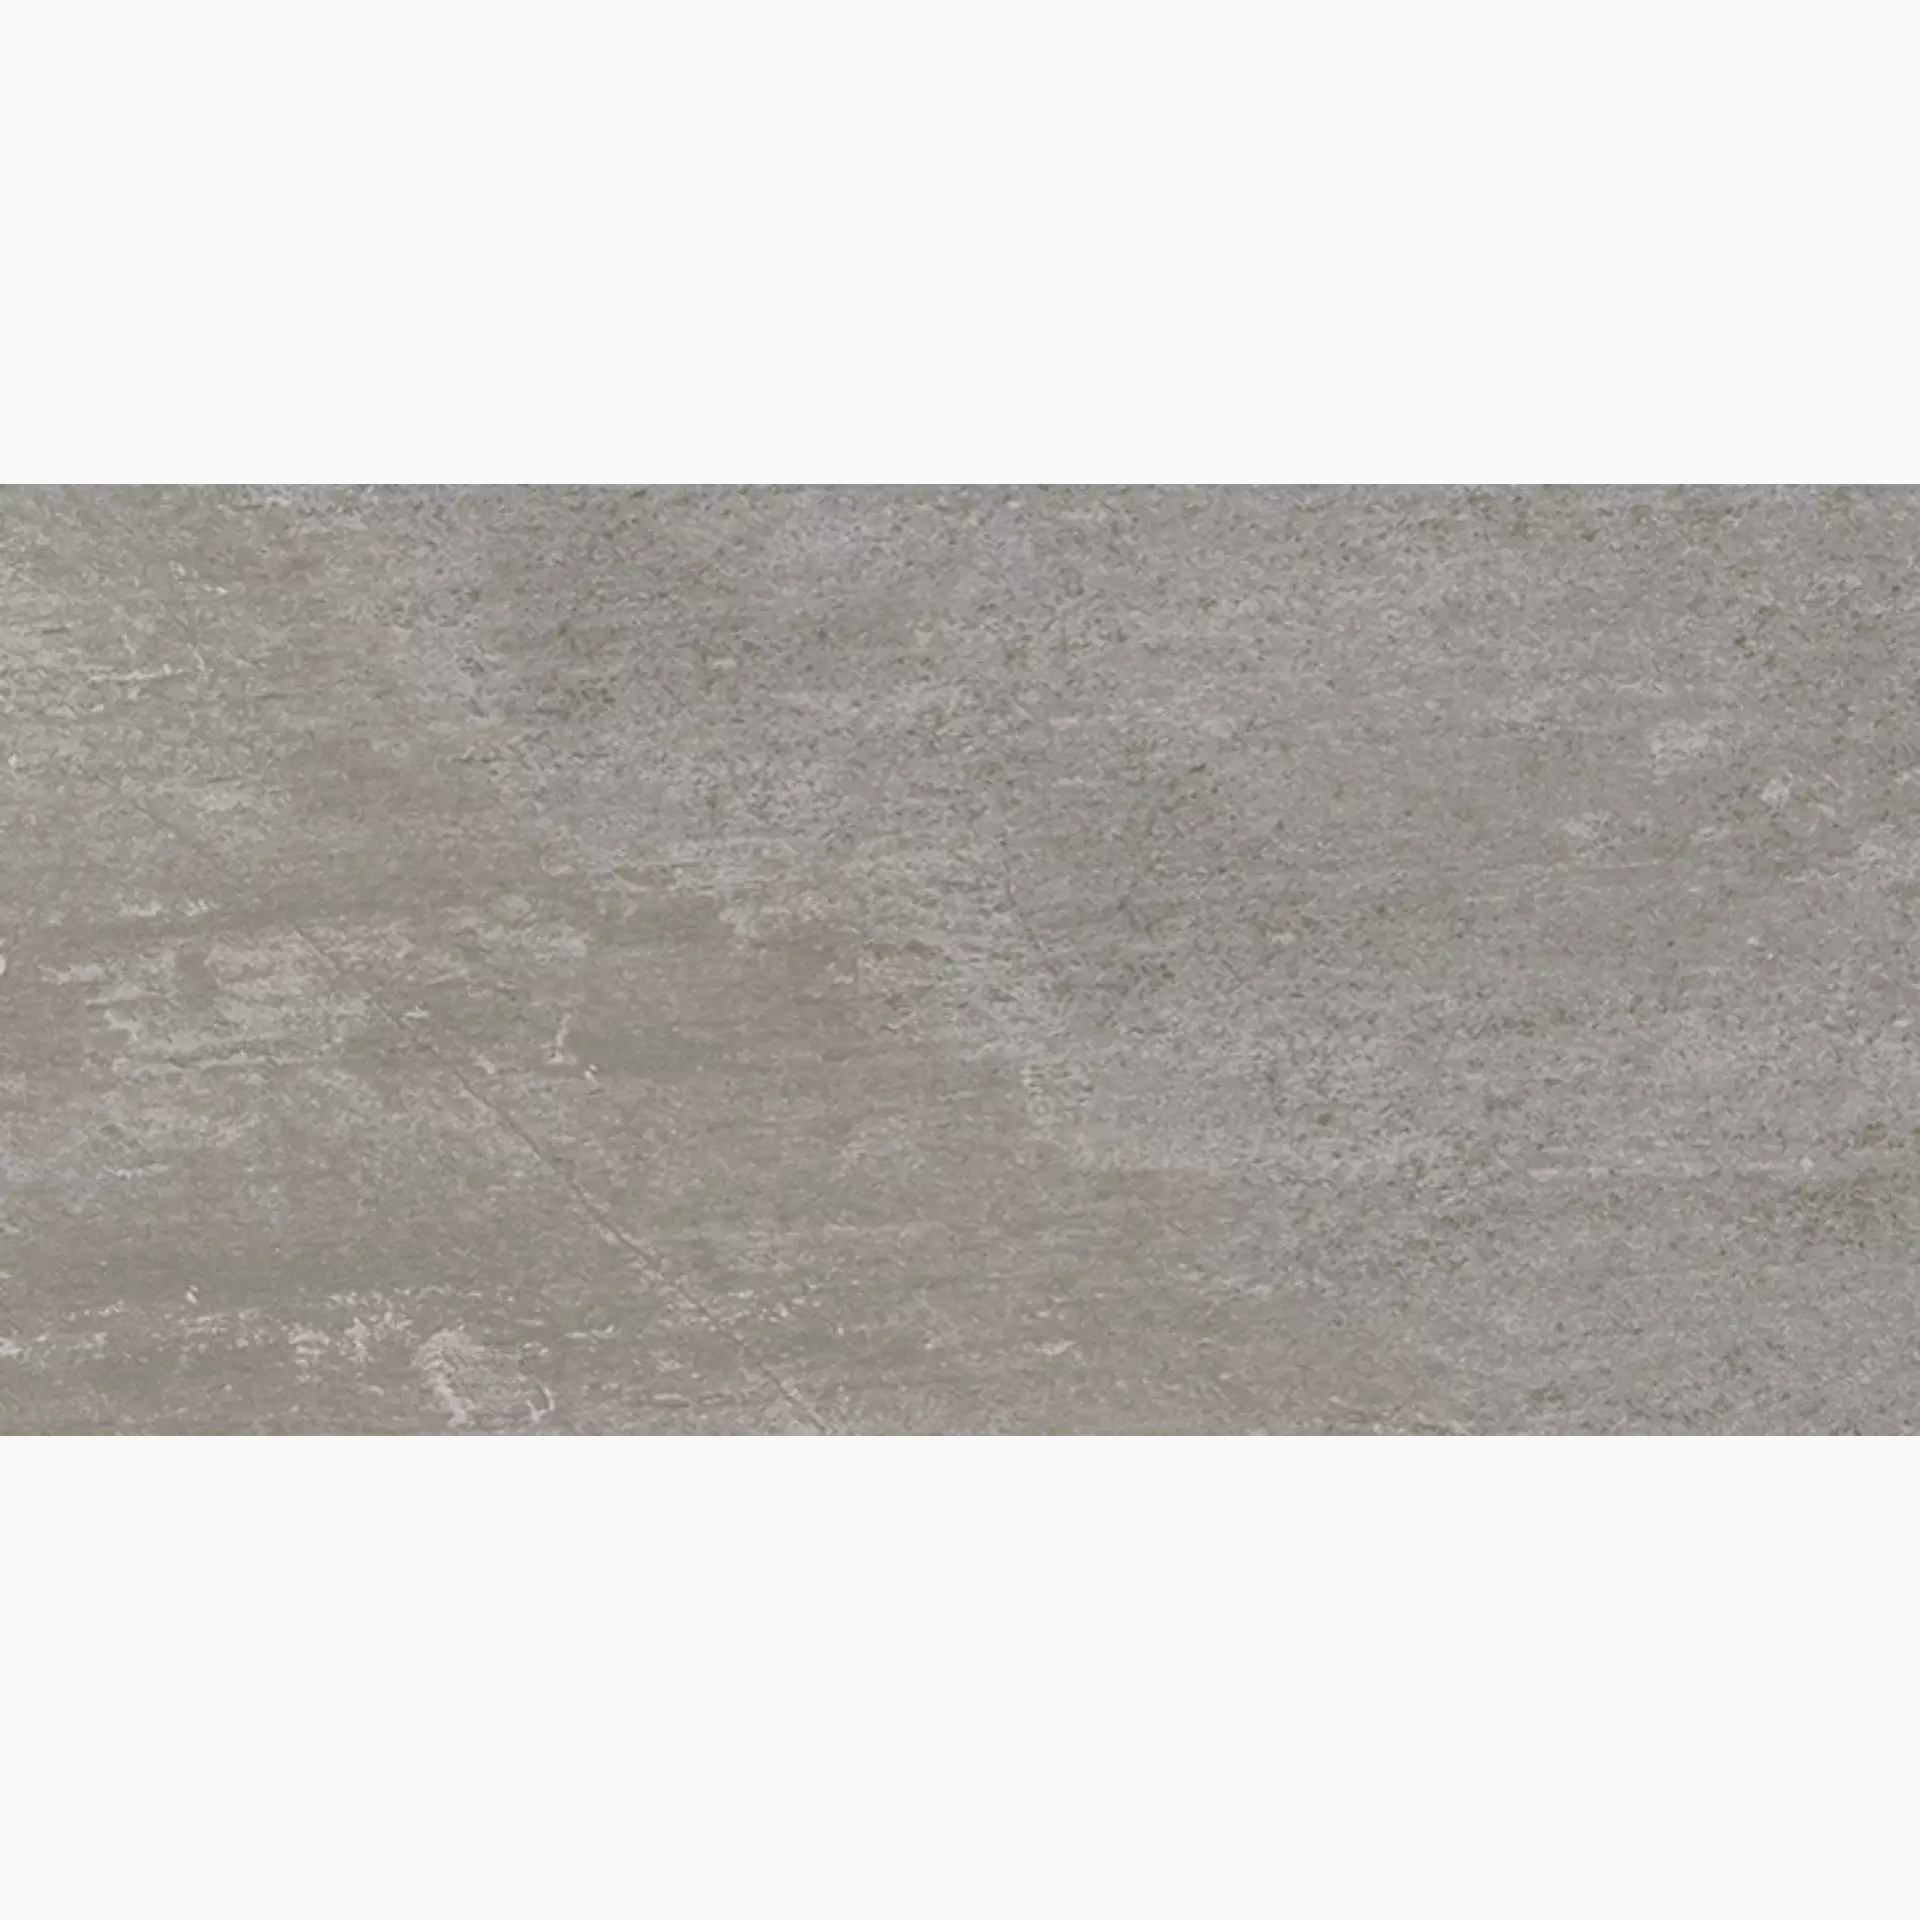 Sichenia Pave' Quarz Esterno Grafite Grip 0006229 30x60cm rectified 10mm